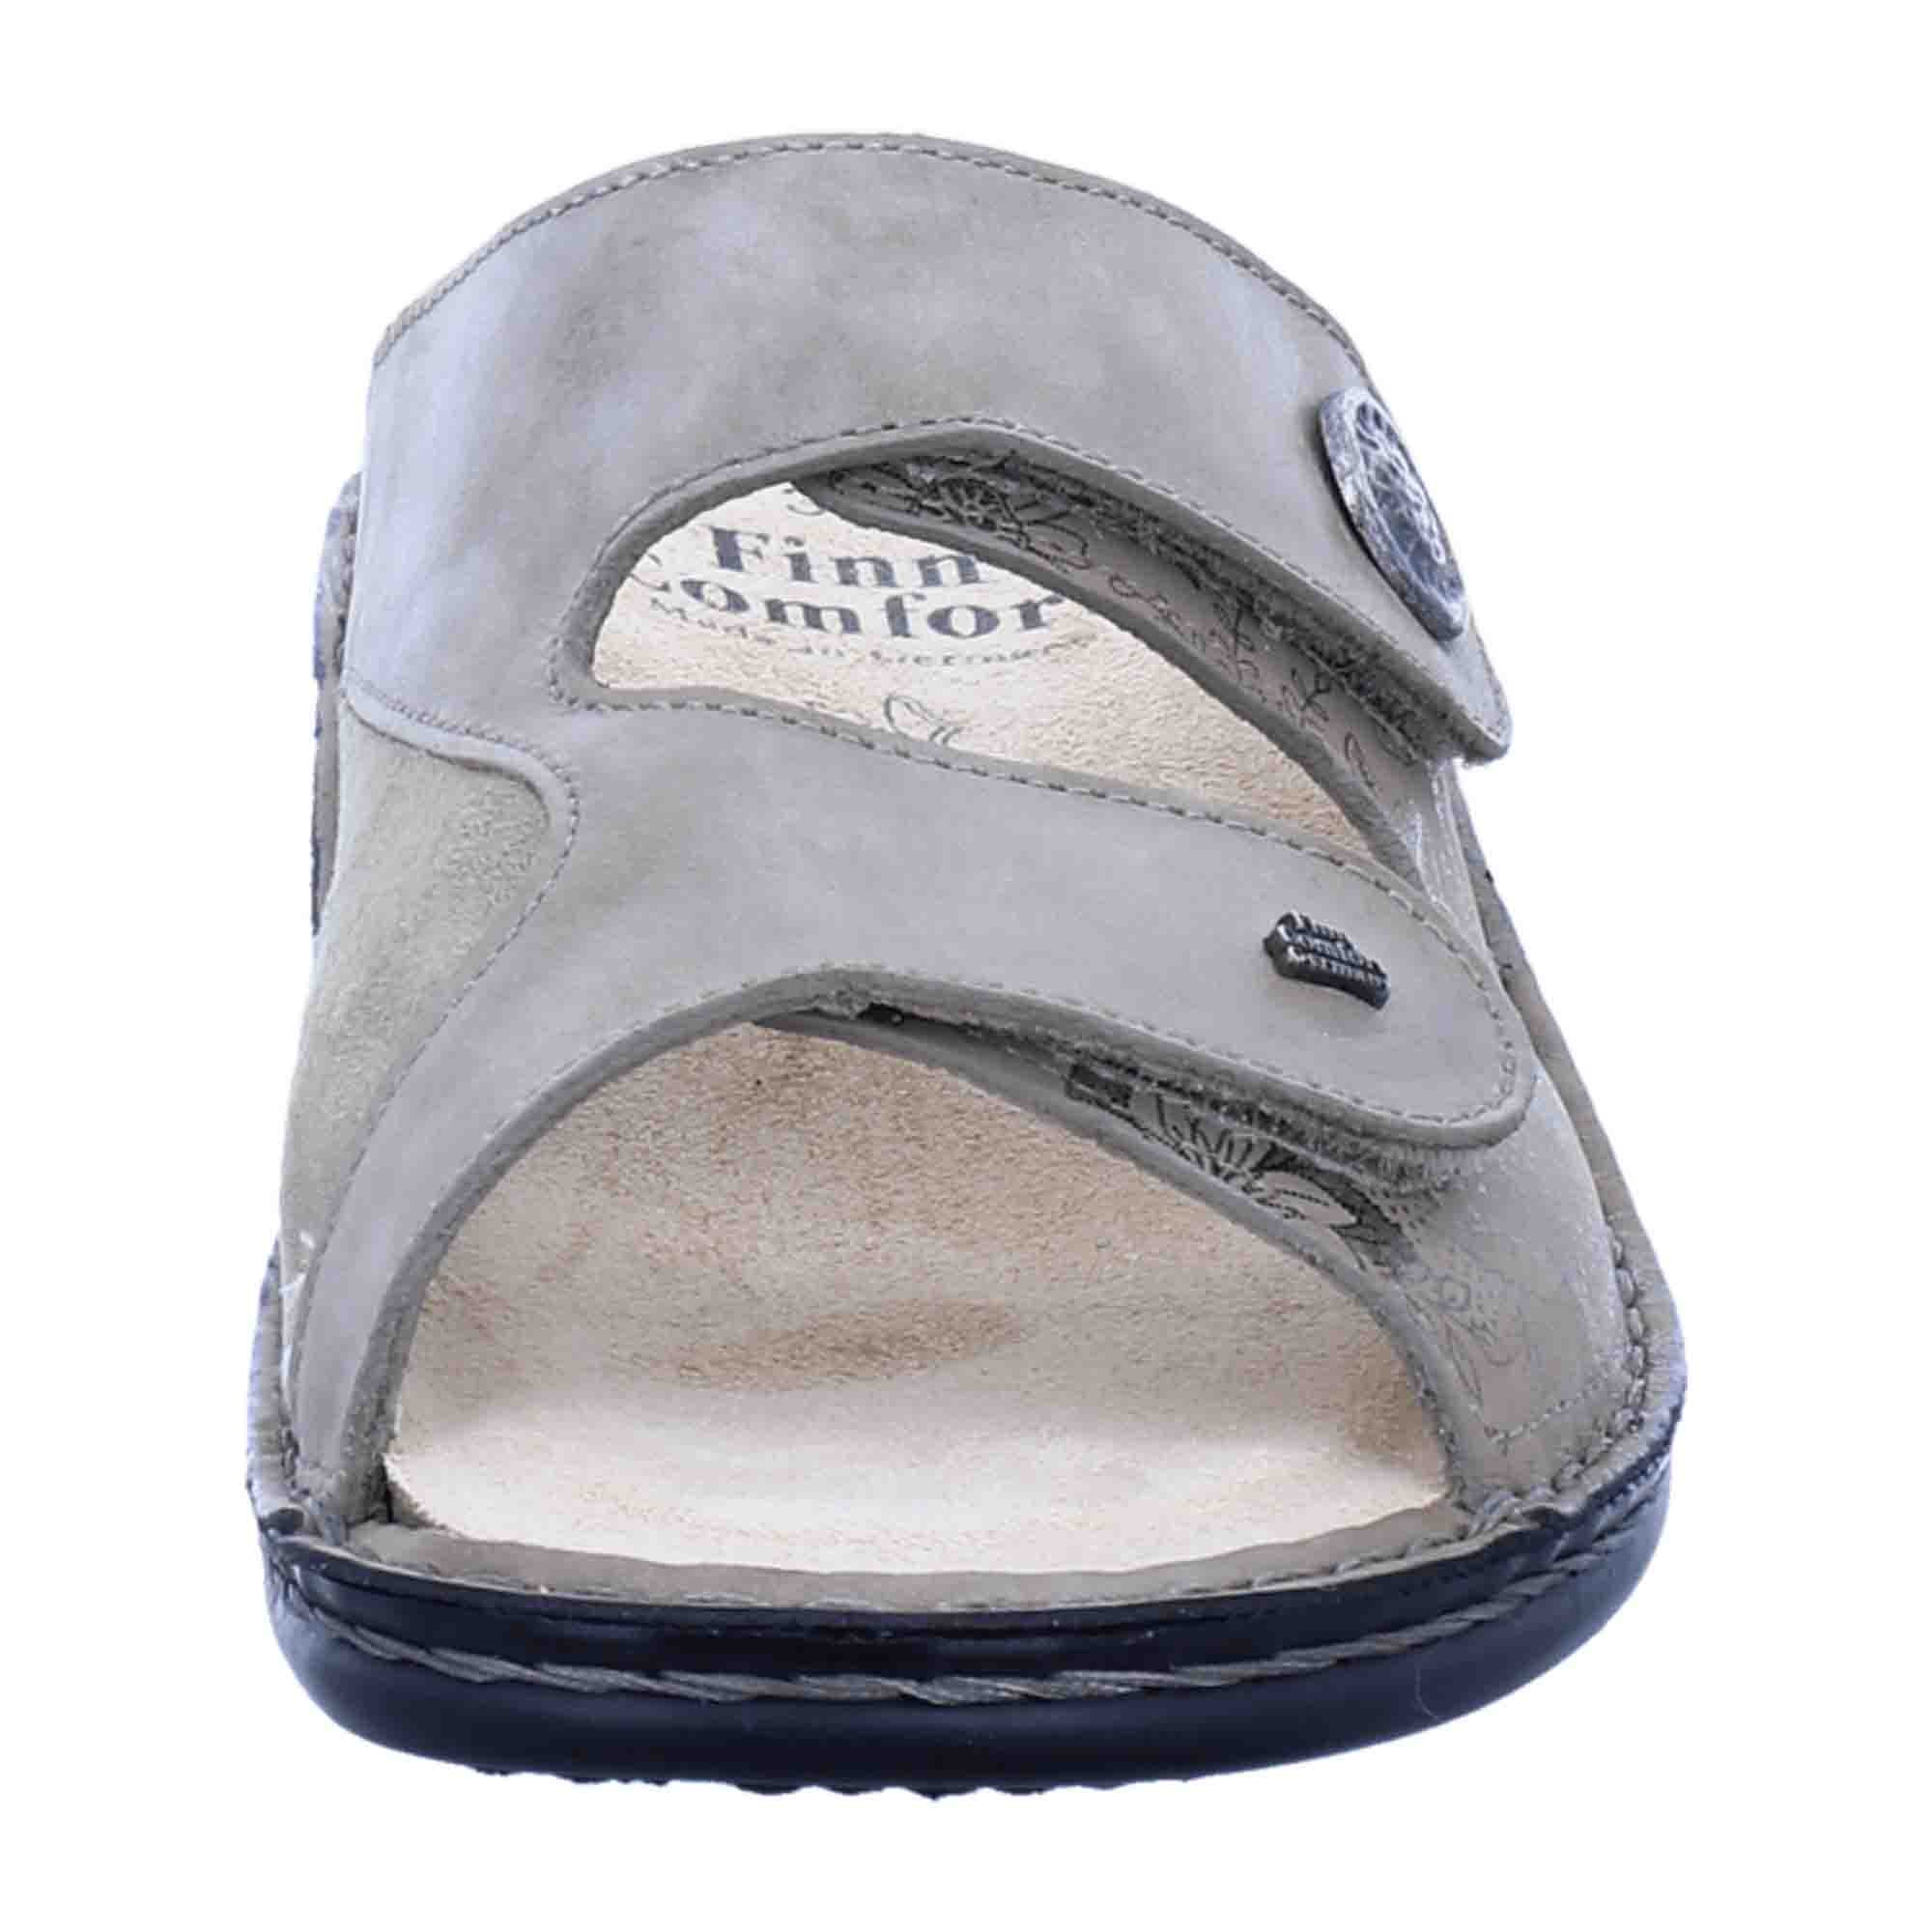 Finn Comfort Zeno Women's Sandals - Stylish & Comfortable in Beige